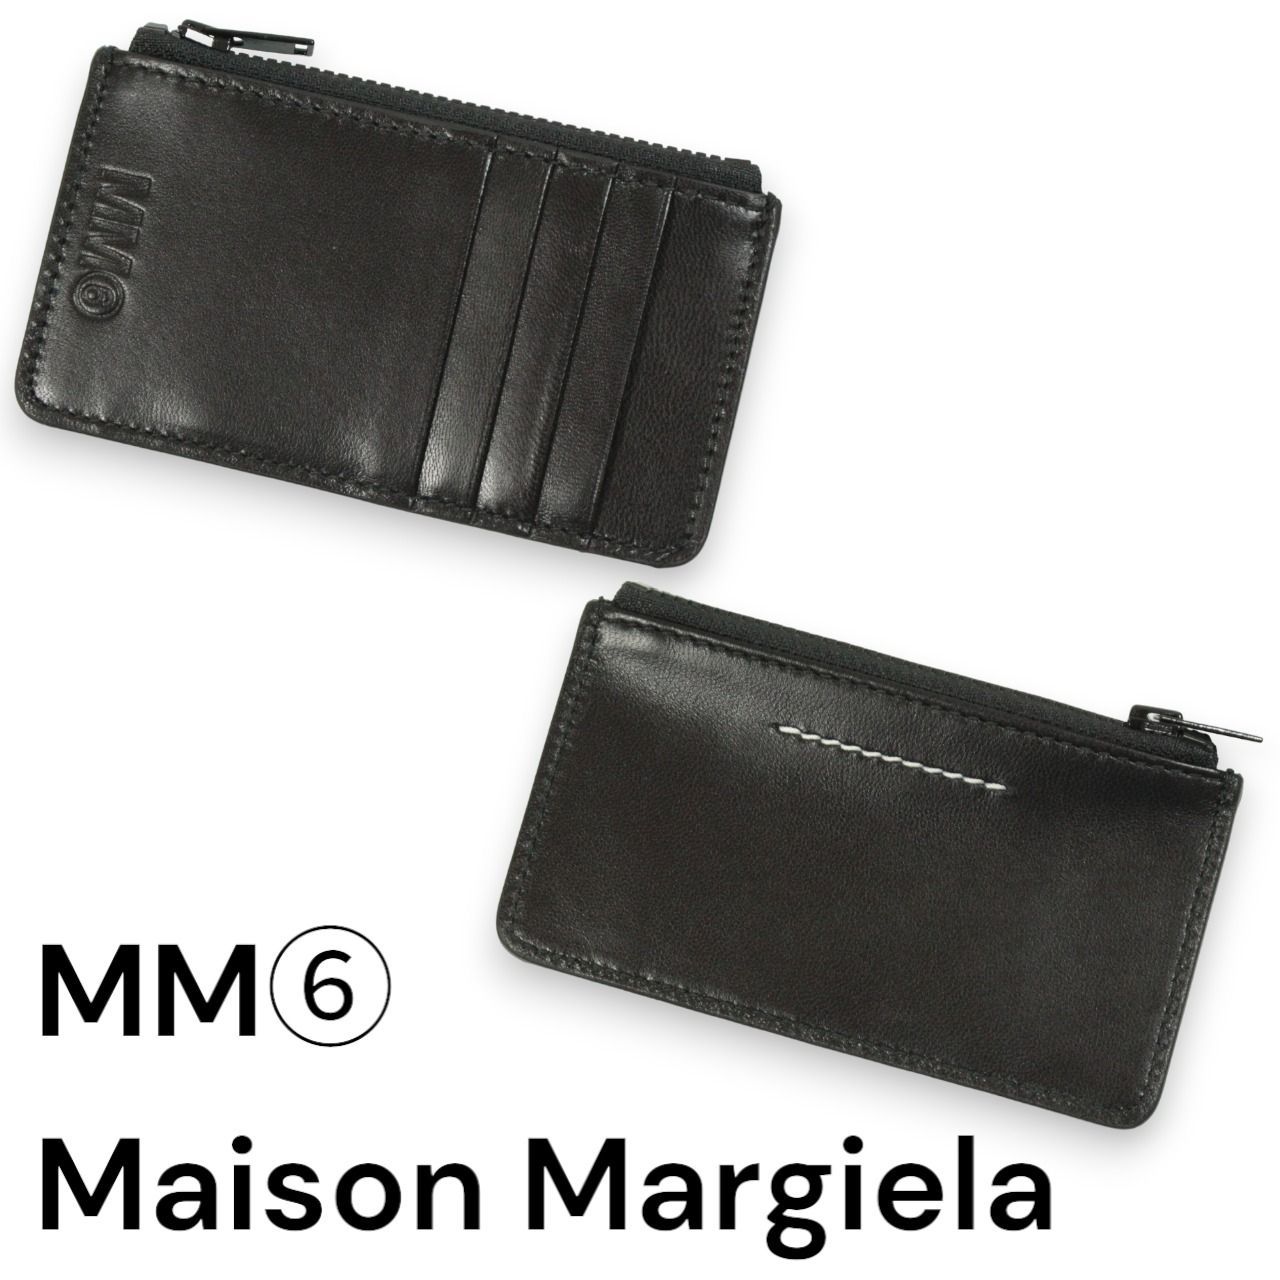 SALE価格 MM6 MaisonMargiela メゾンマルジェラ カードケース 小銭入れ